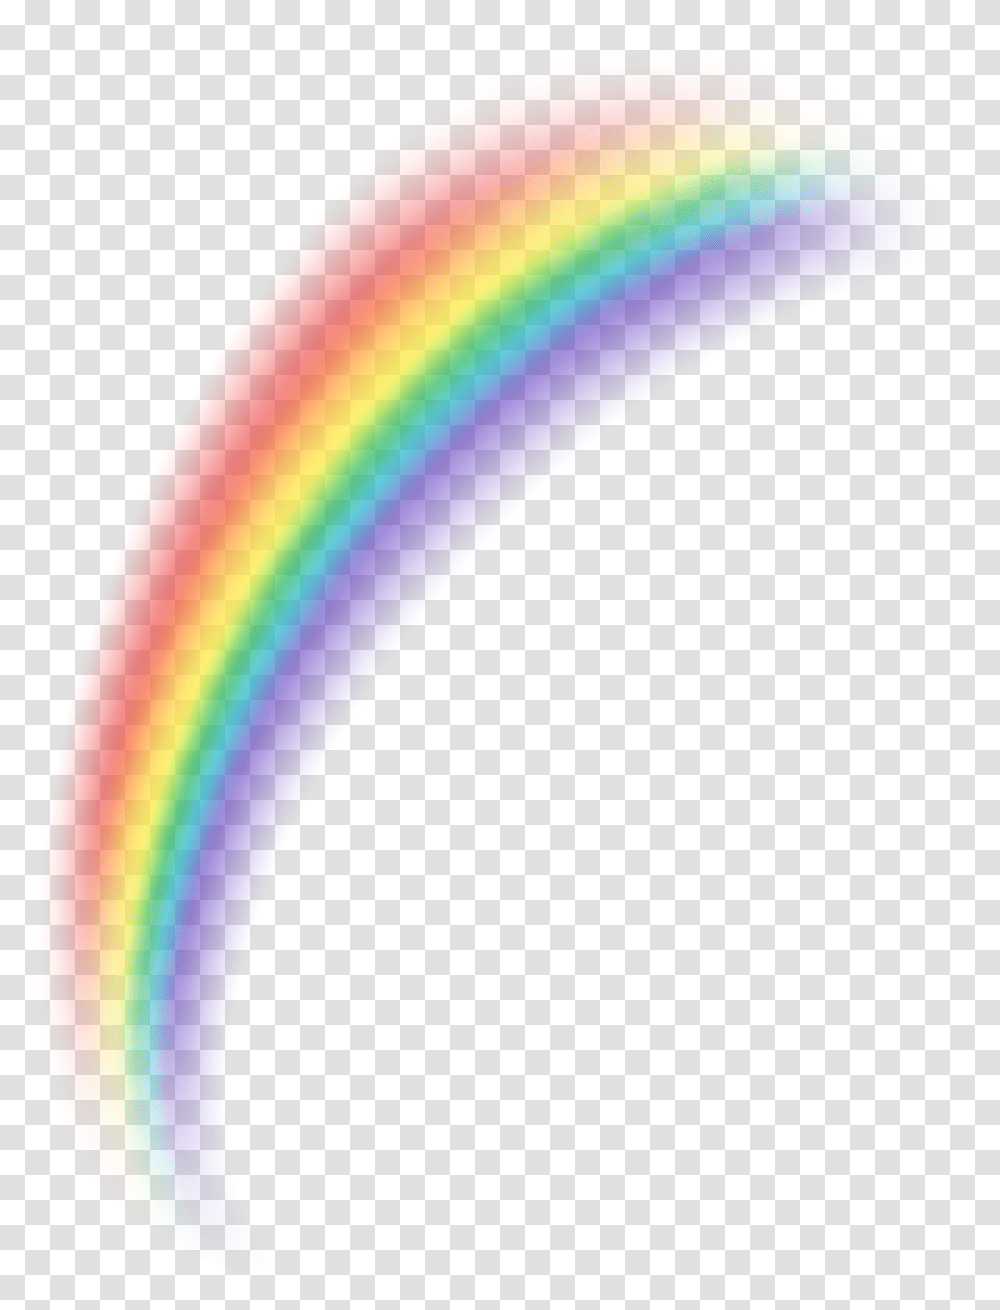 Rainbow Image Clip Art Free Rainbow Arco Iris Picsart, Nature, Outdoors, Sky, Disk Transparent Png